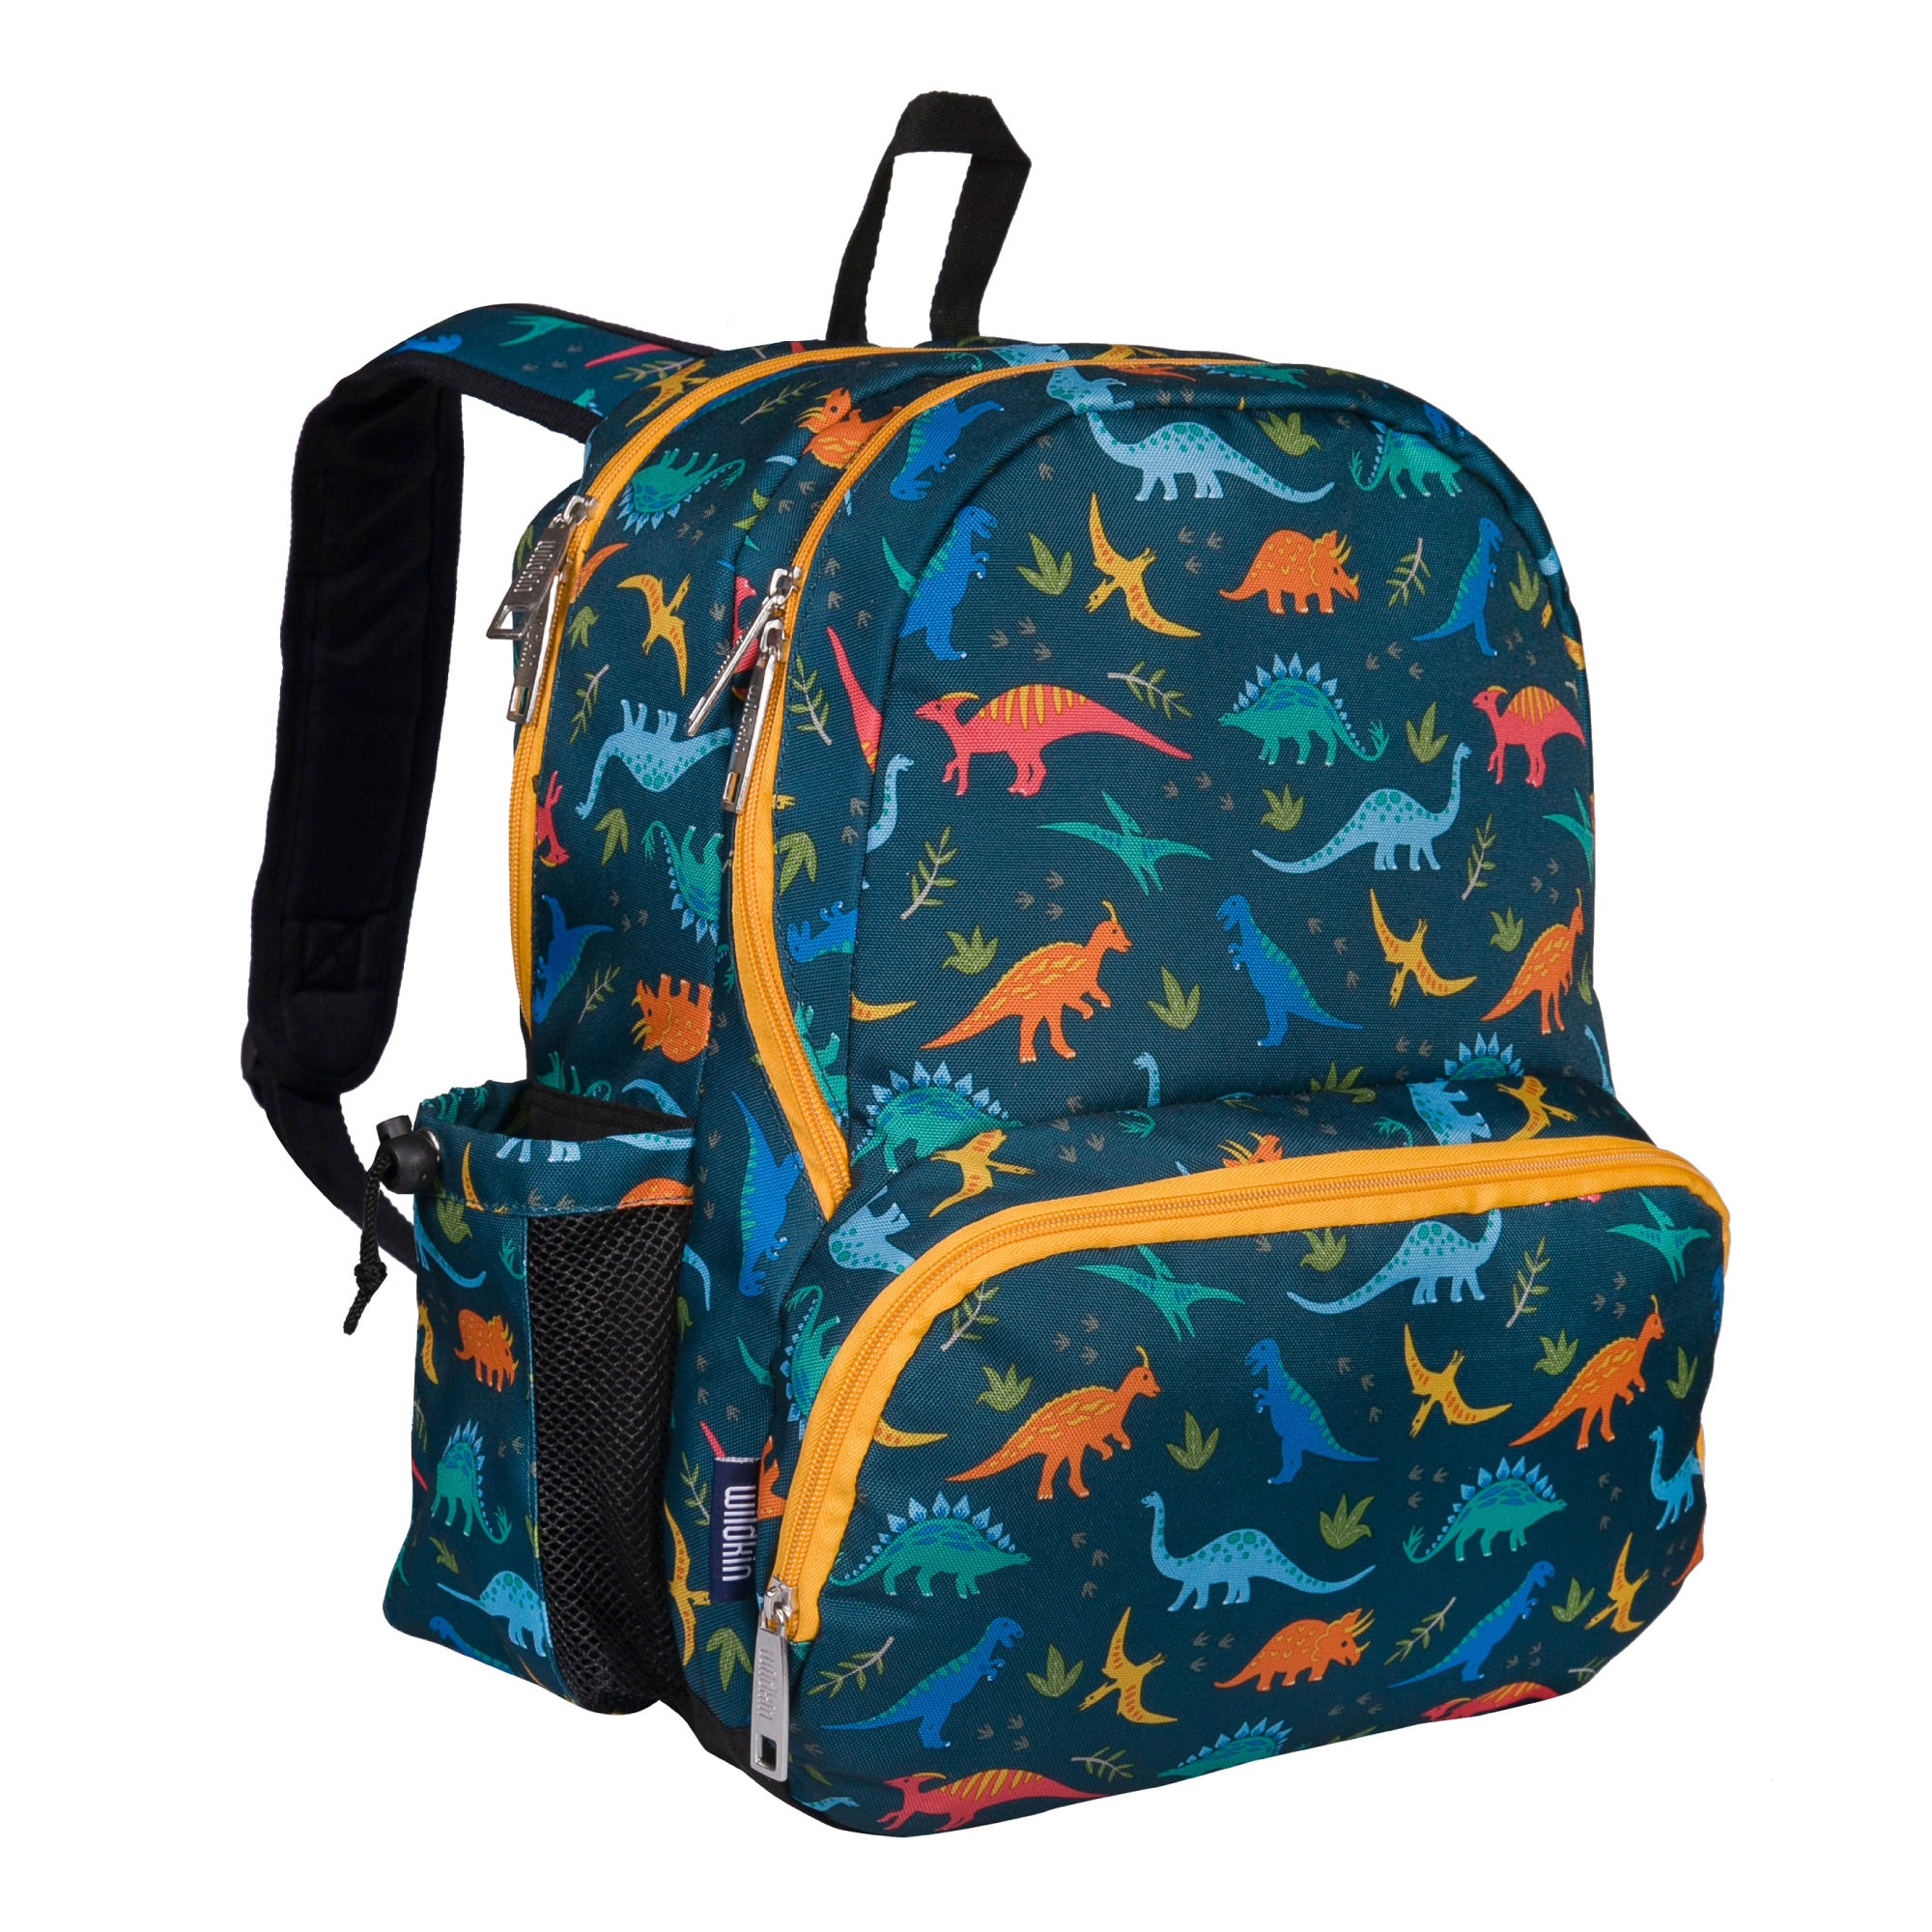 Wildkin - Jurassic Dinosaurs Backpack - 12 inch